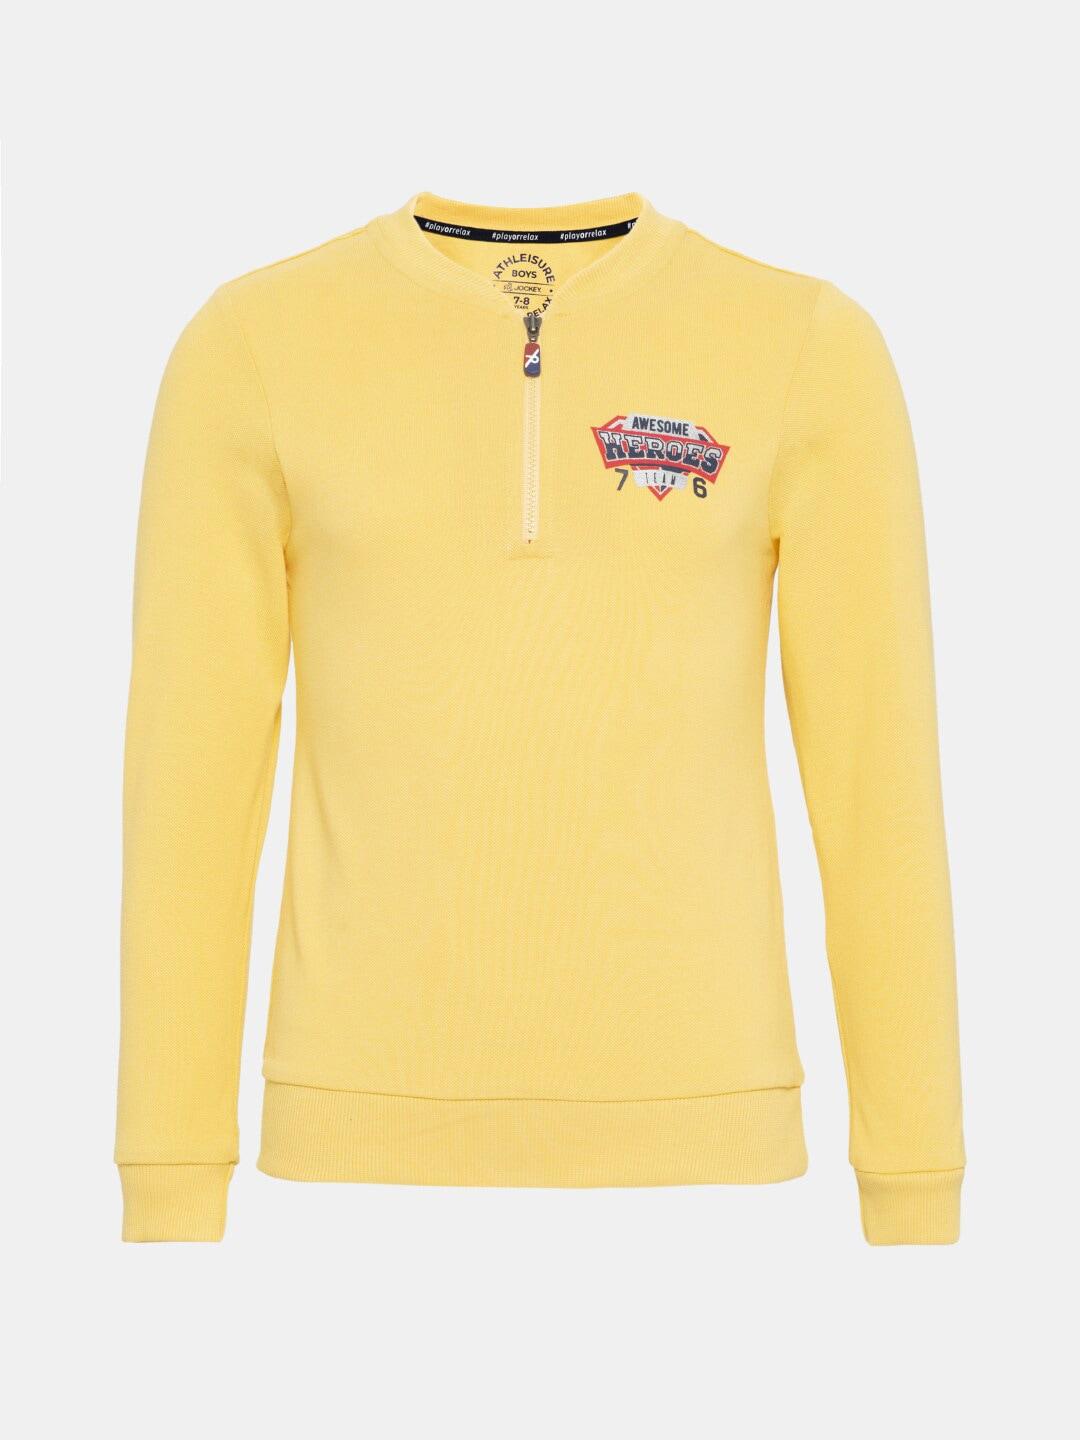 jockey-boys-yellow-sweatshirt